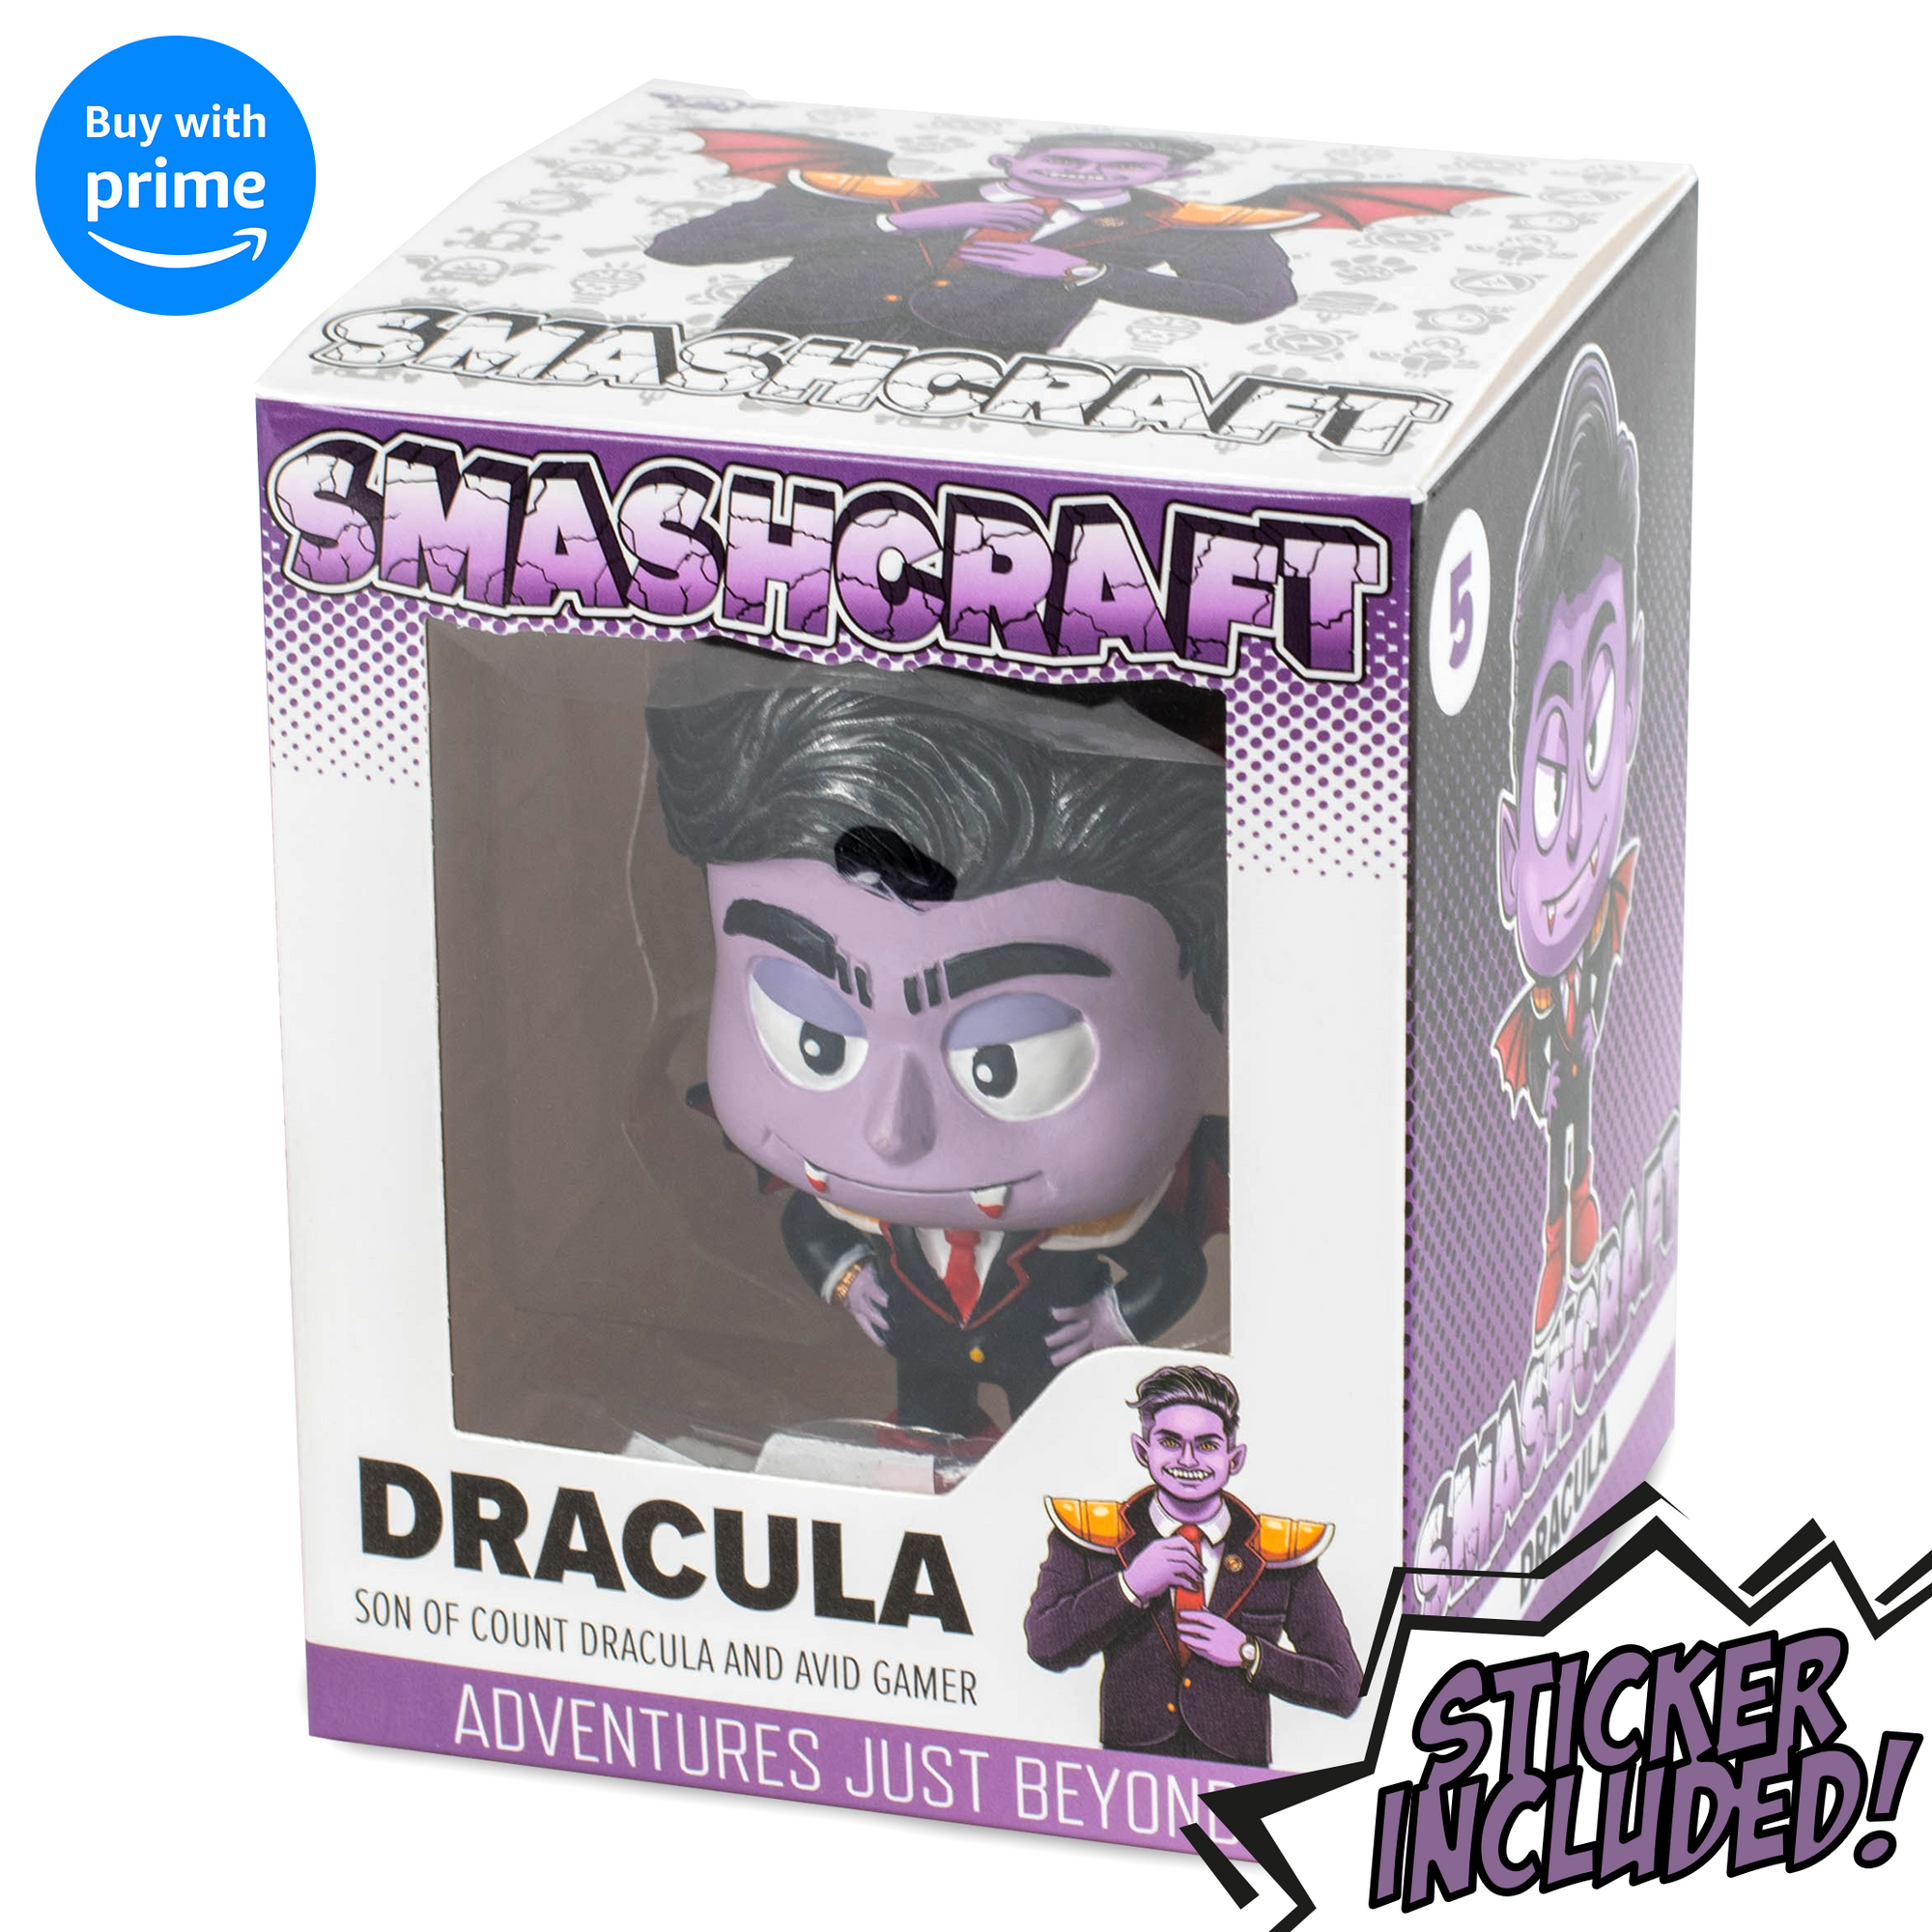 Smashcraft Dracula Jr collectors box, with back story and memorabilia fantasy character sticker